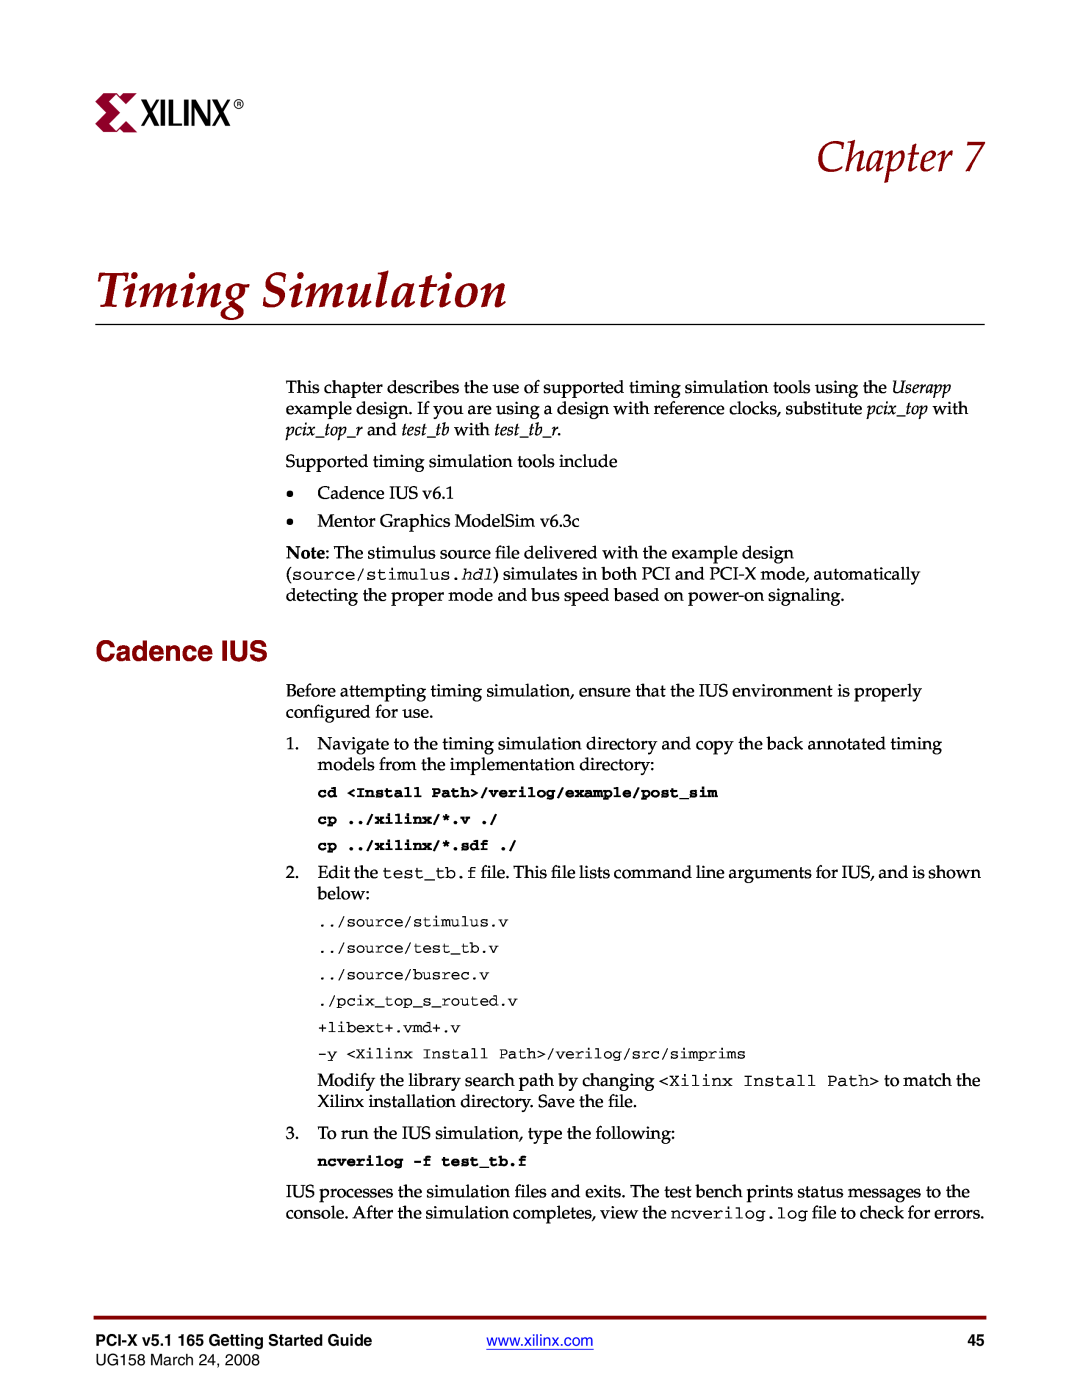 Xilinx PCI-X v5.1 manual Timing Simulation, Chapter, Cadence IUS, cd Install Path/verilog/example/postsim cp ../xilinx/*.v 